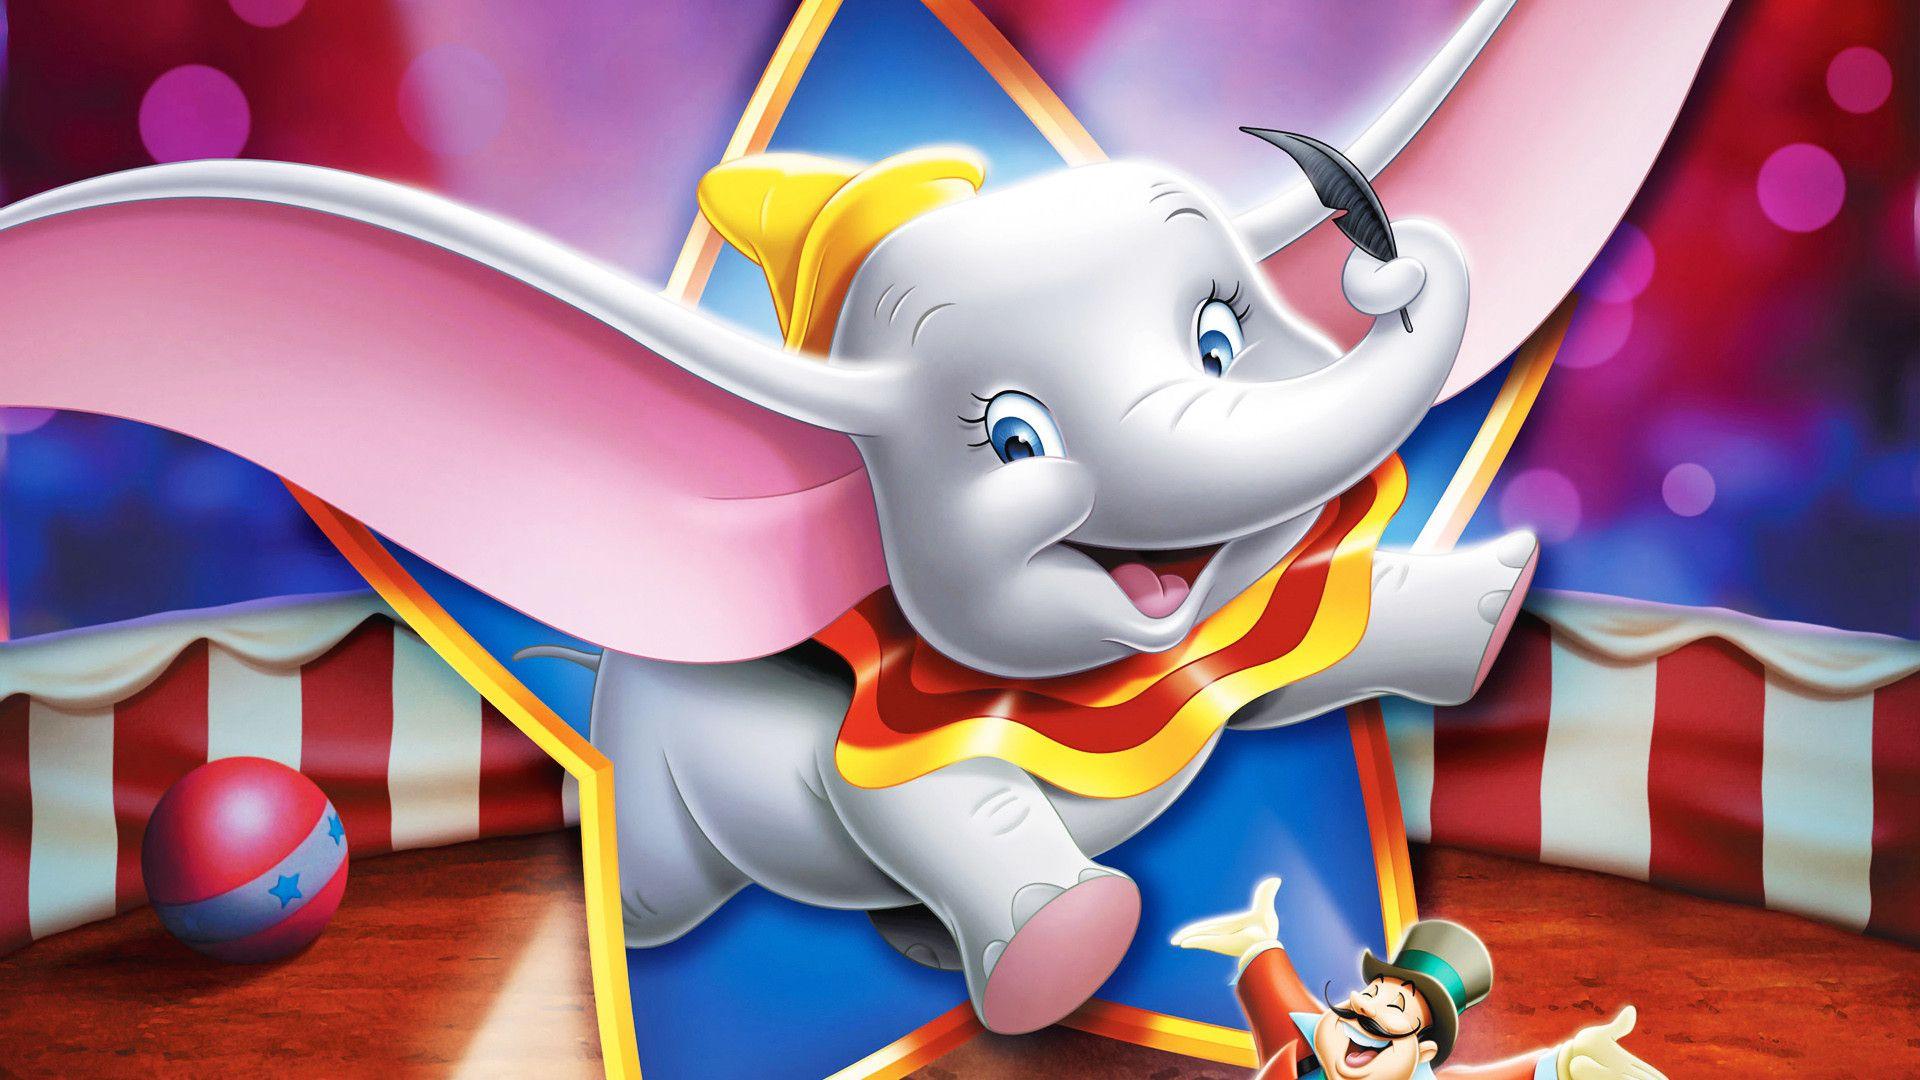 Fantastic HD Dumbo Wallpaper